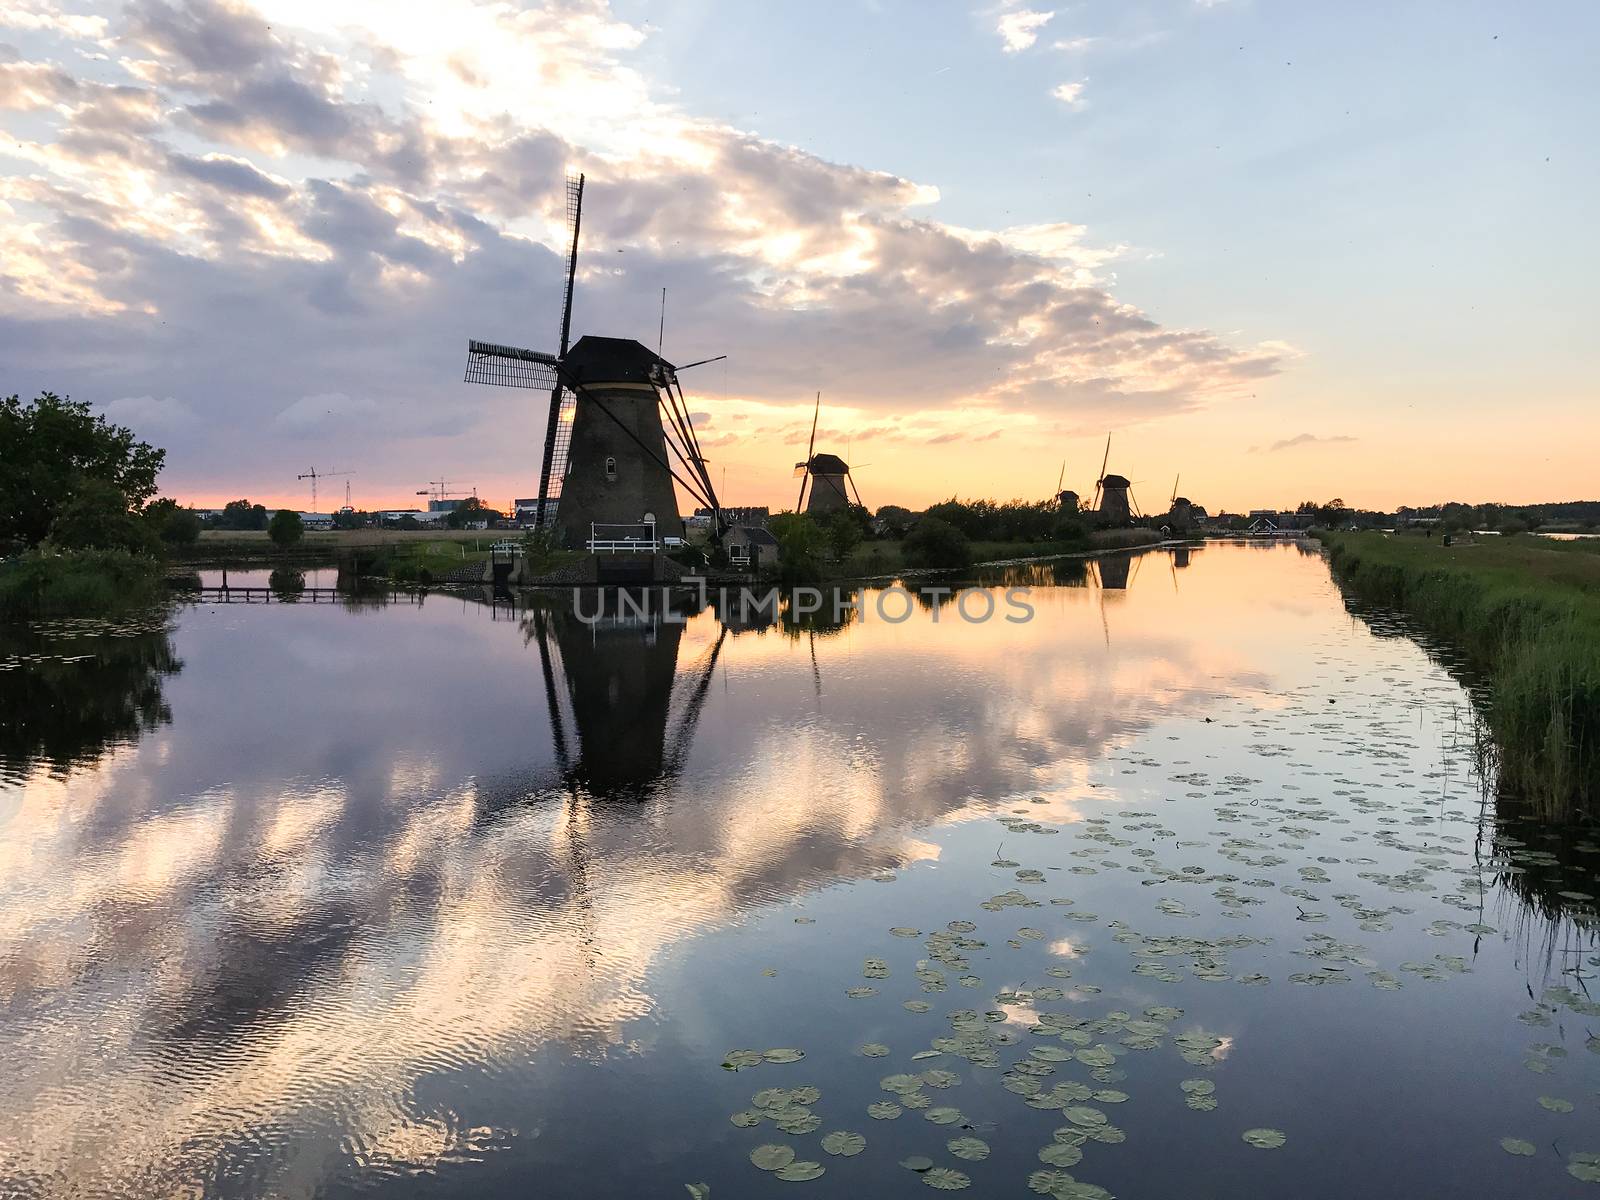 Beautiful dutch windmill landscape at the famous Kinderdijk canals, UNESCO world heritage site